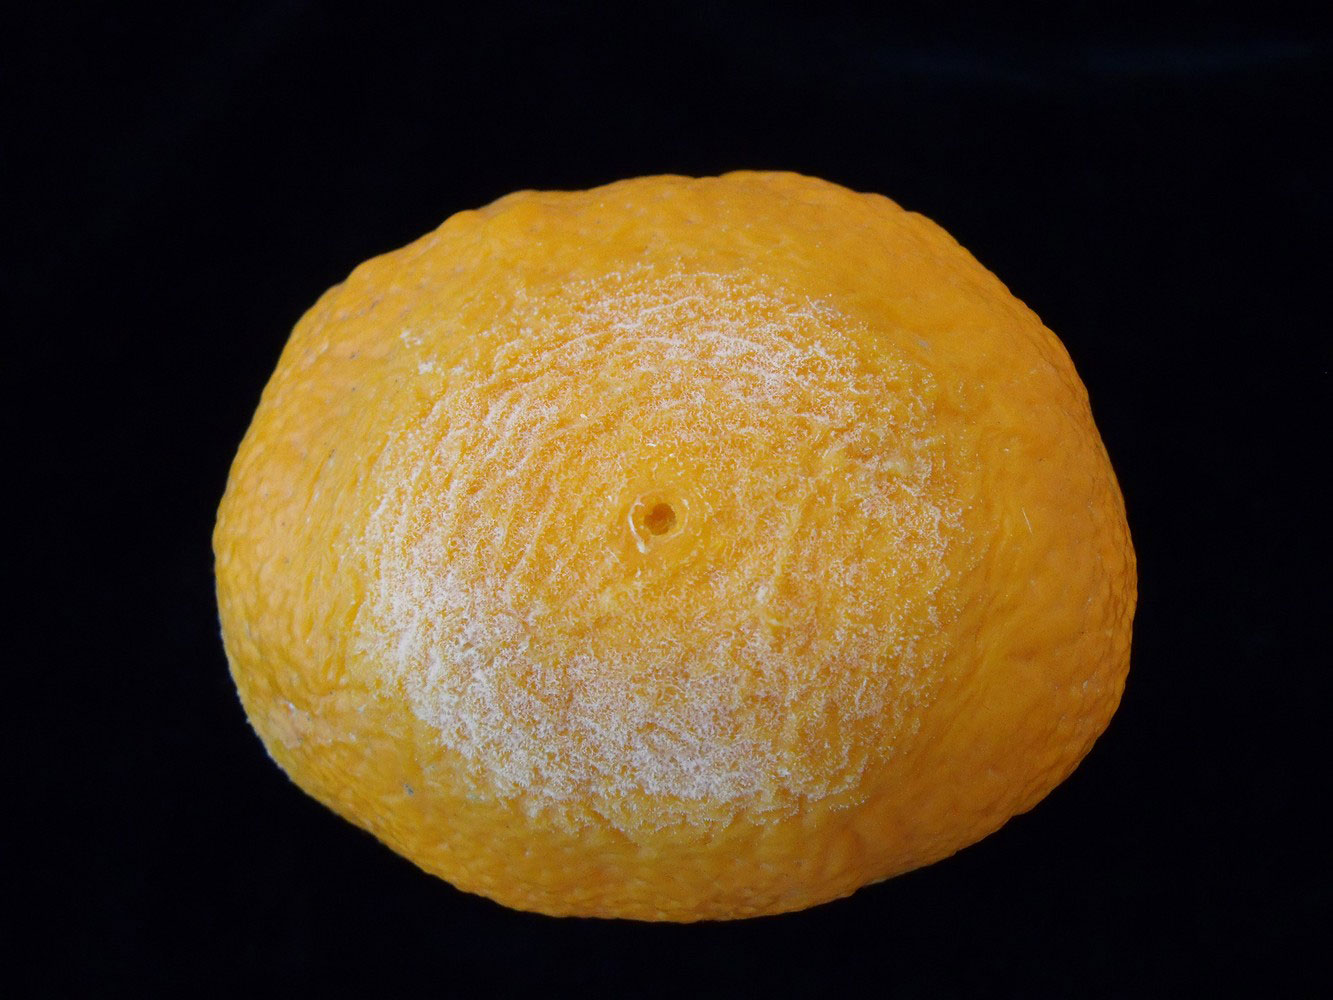 Fotografa 1. Sintomatologa de la podredumbre amarga causada por Geotrichum citri-aurantii en mandarina